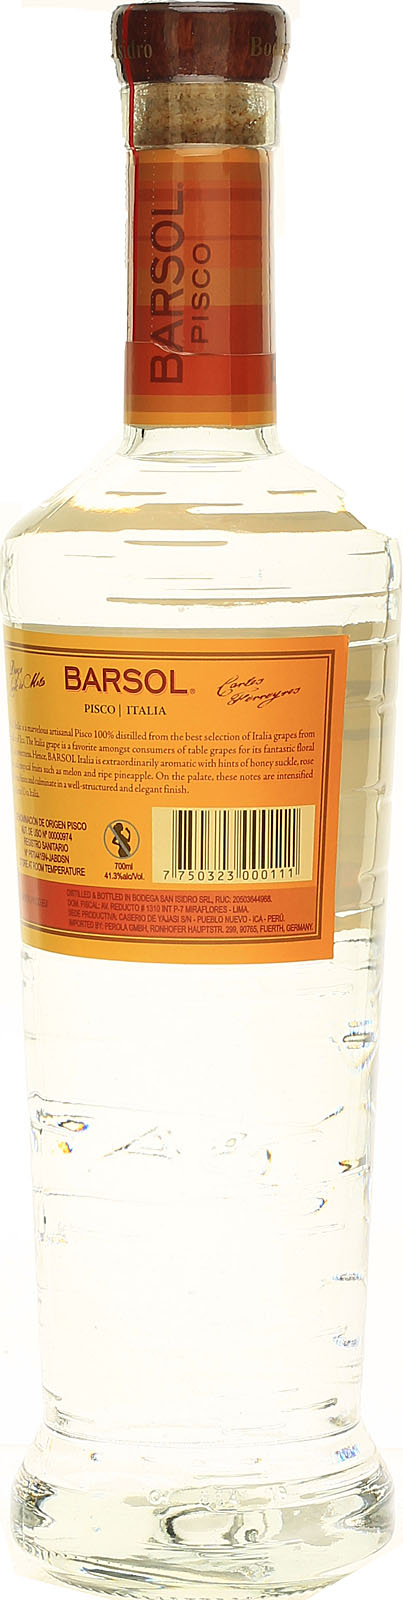 41,3 Liter % Italia im Barsol Vol. Pisco Shop 0,7